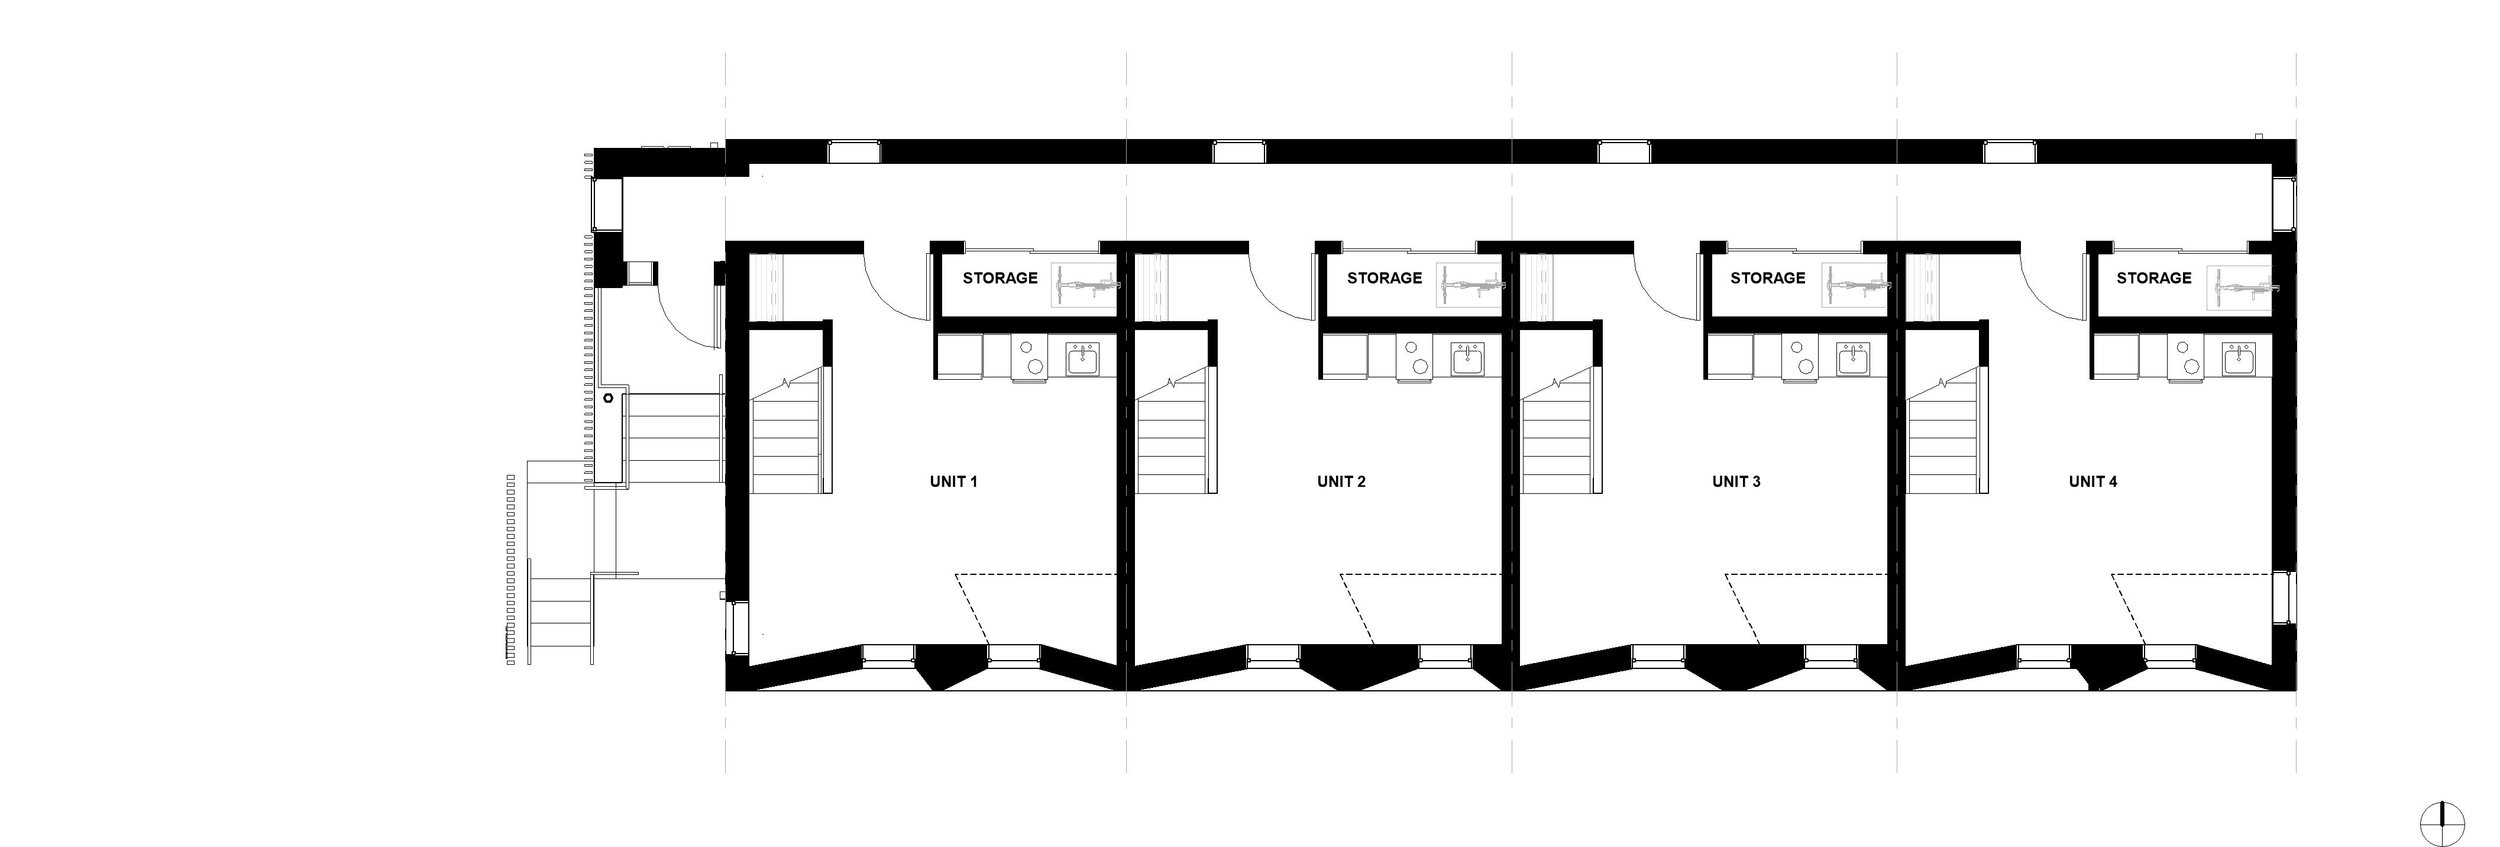 R&D Modular_PRESENTATION - Floor Plan - LEVEL 2.jpg